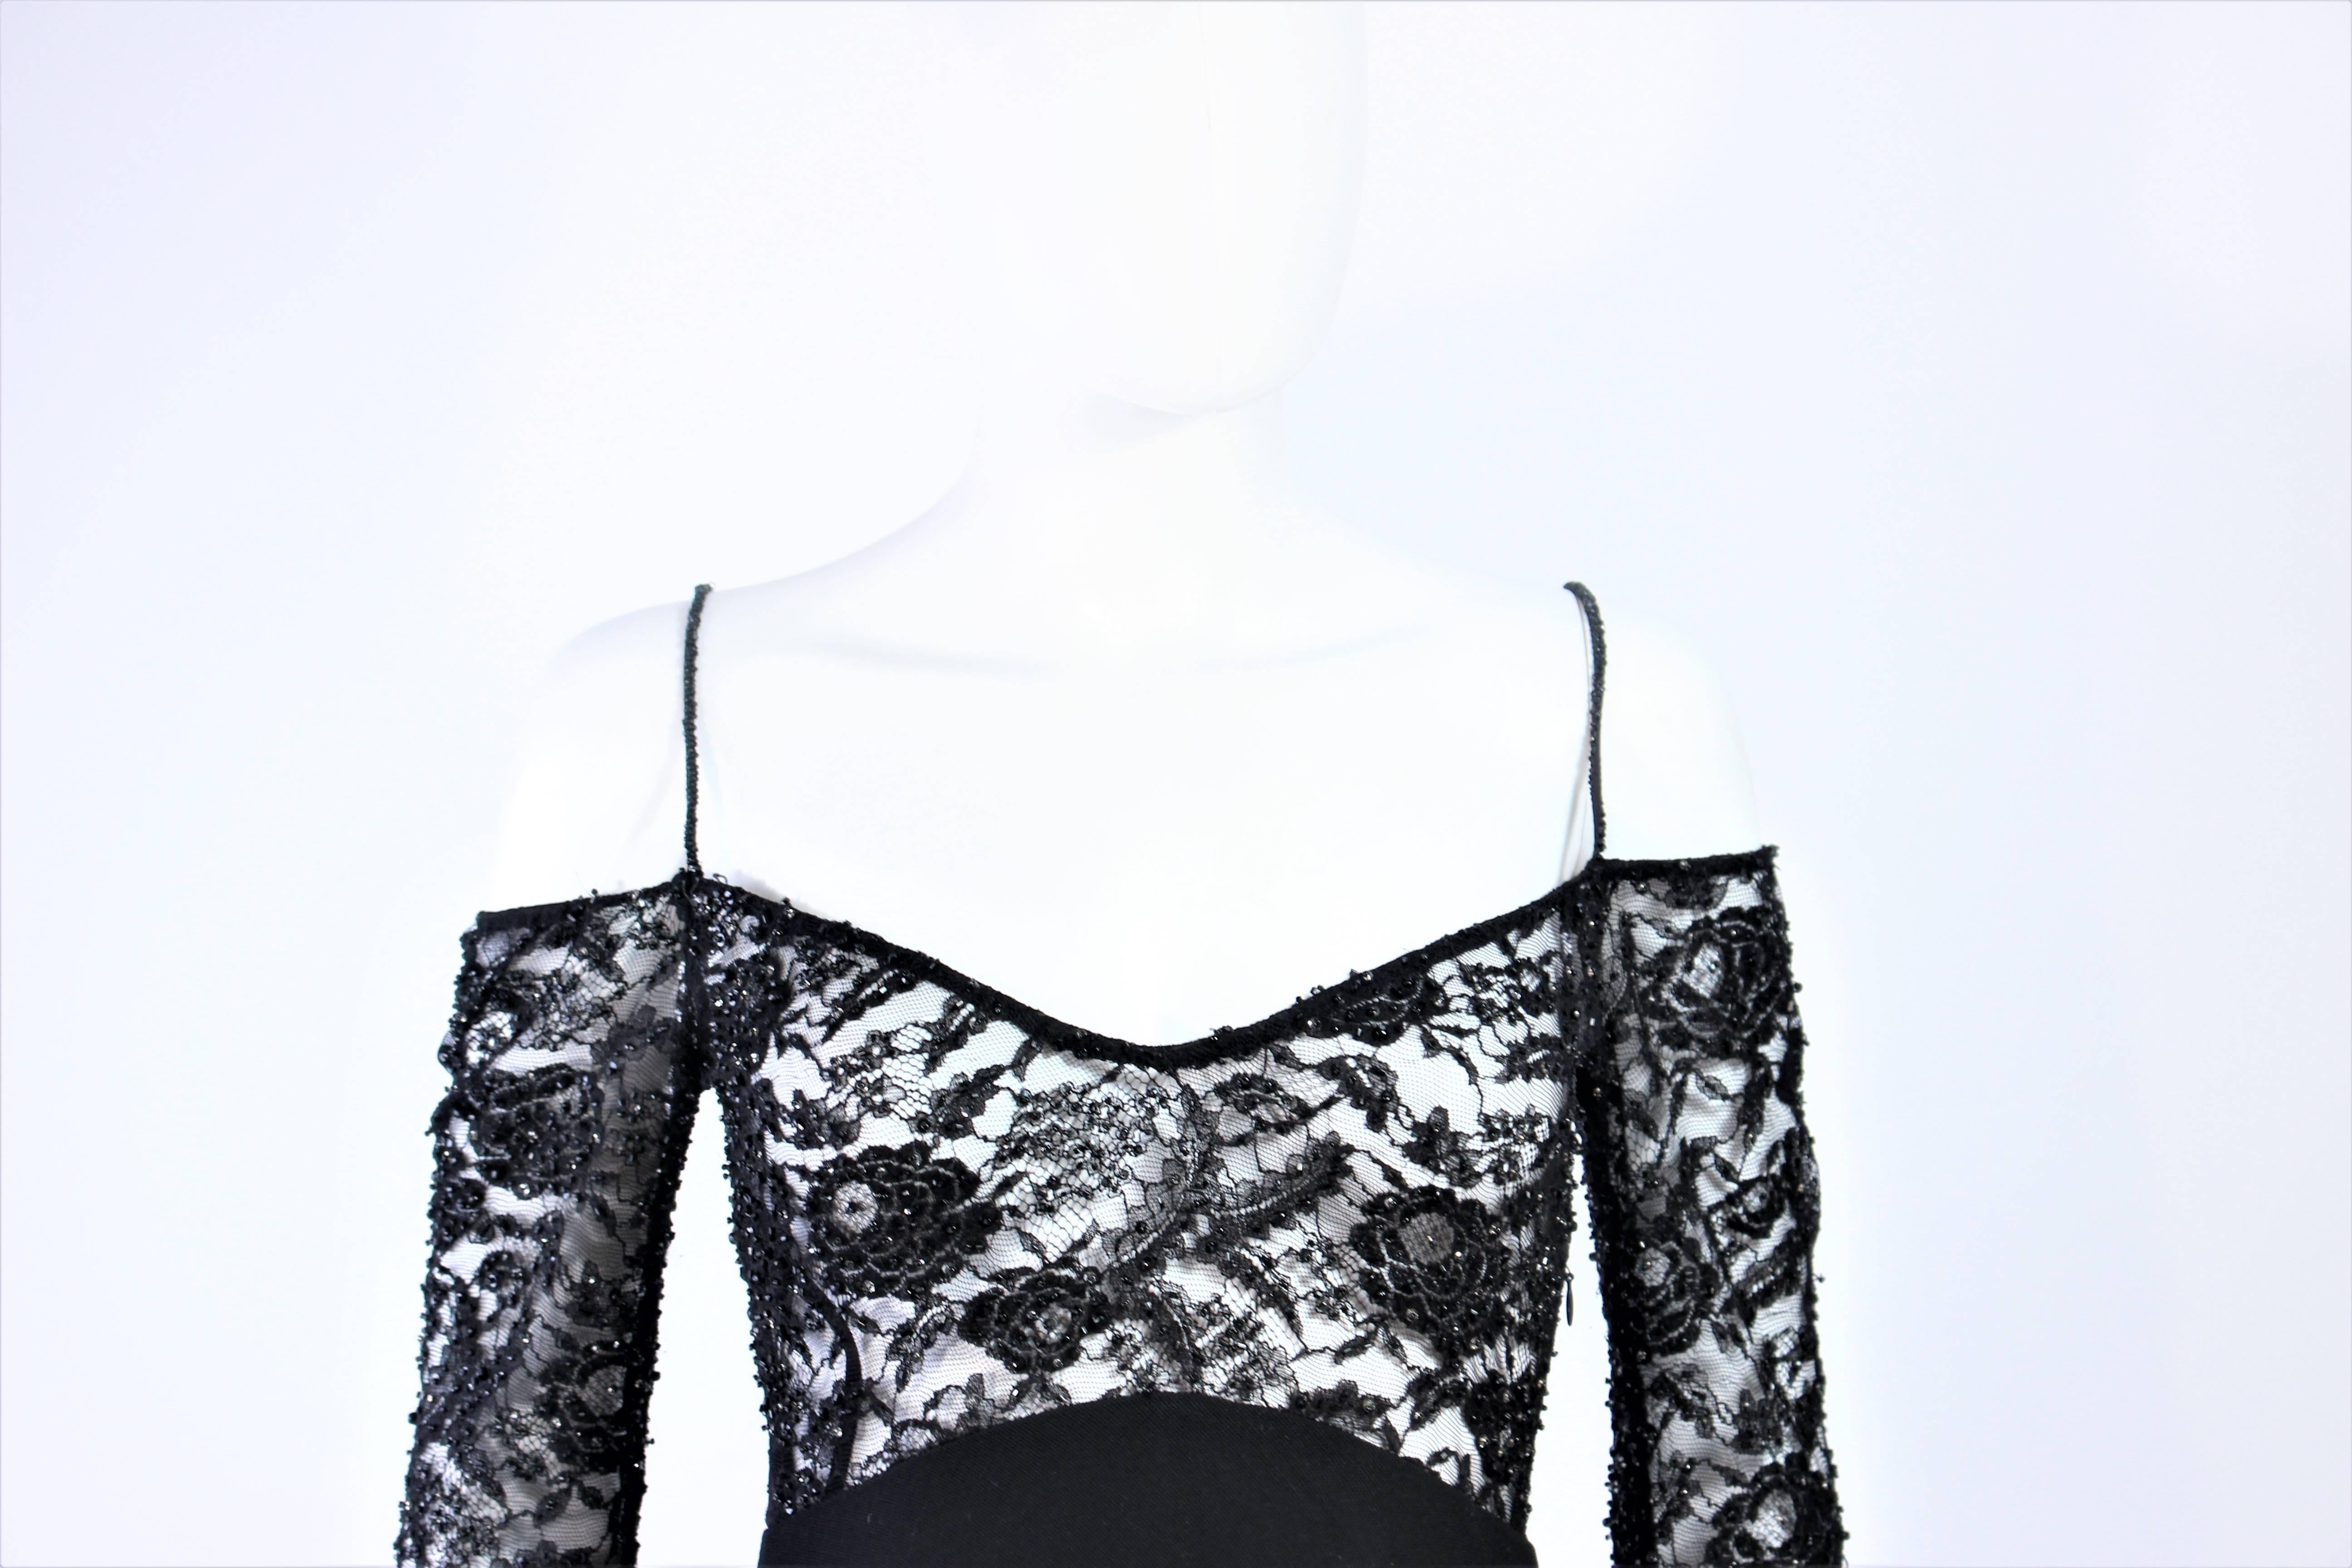 donna karan black and white dress